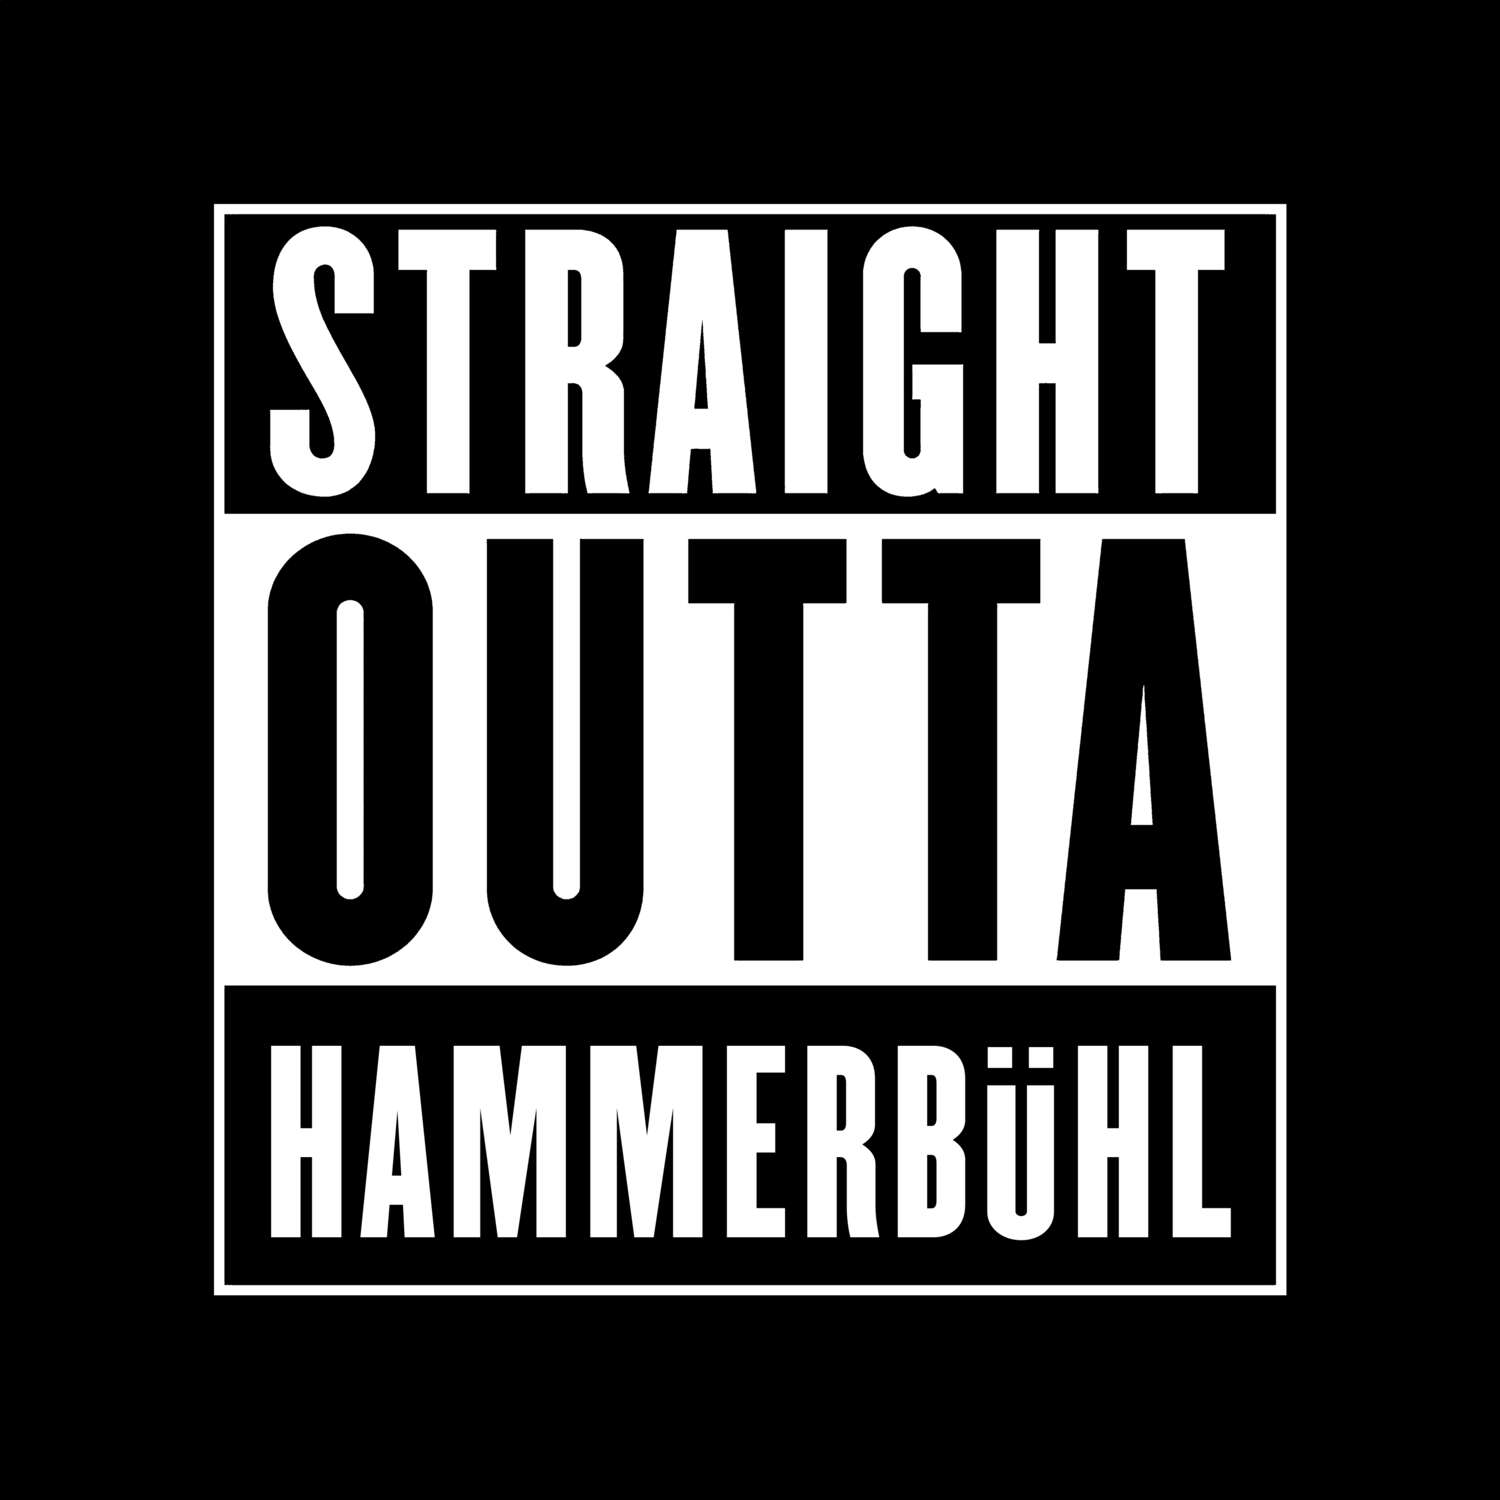 Hammerbühl T-Shirt »Straight Outta«